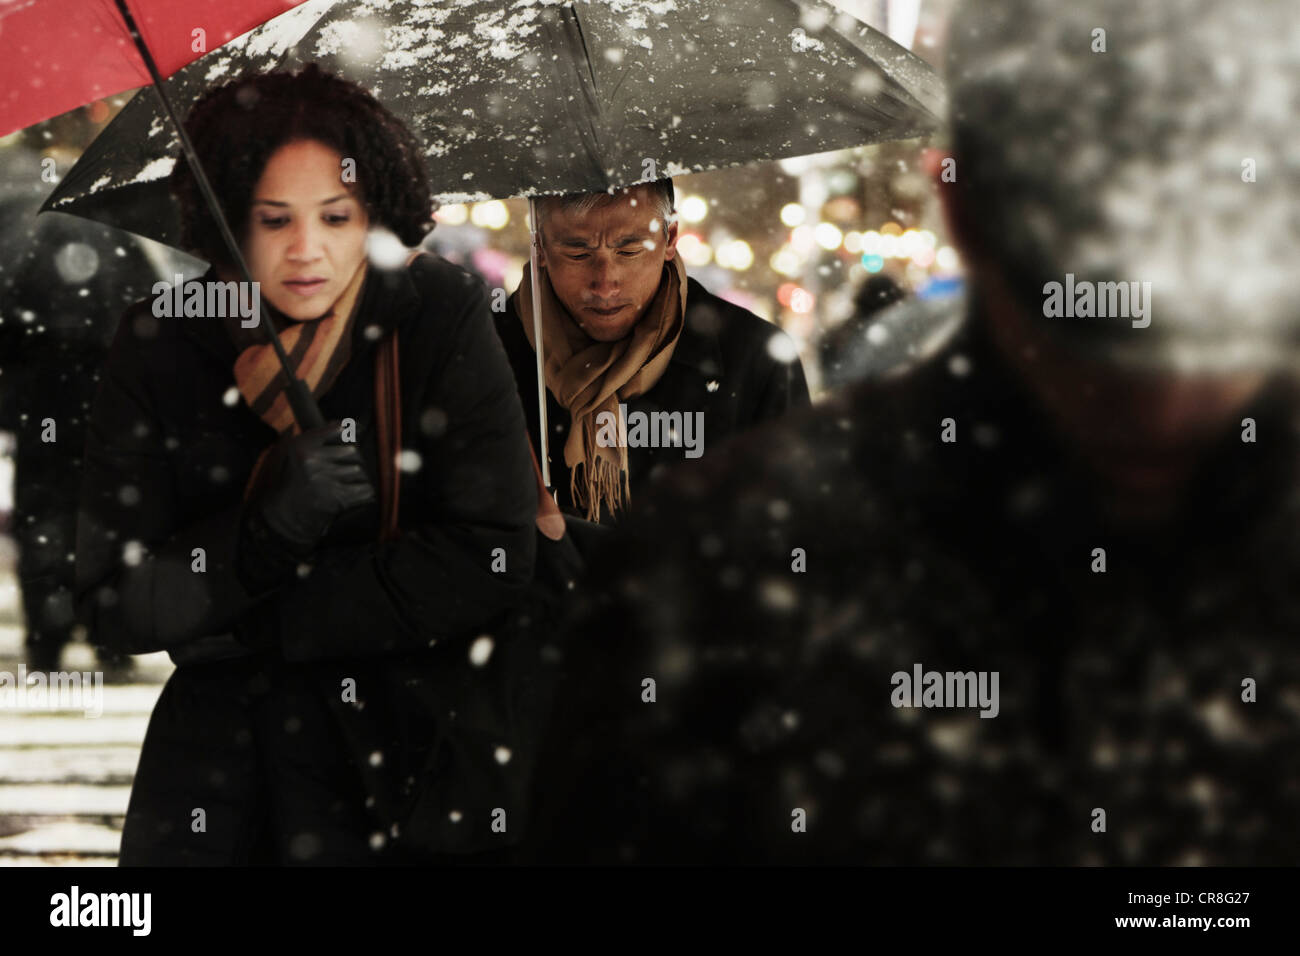 Couple walking through snow in city Stock Photo